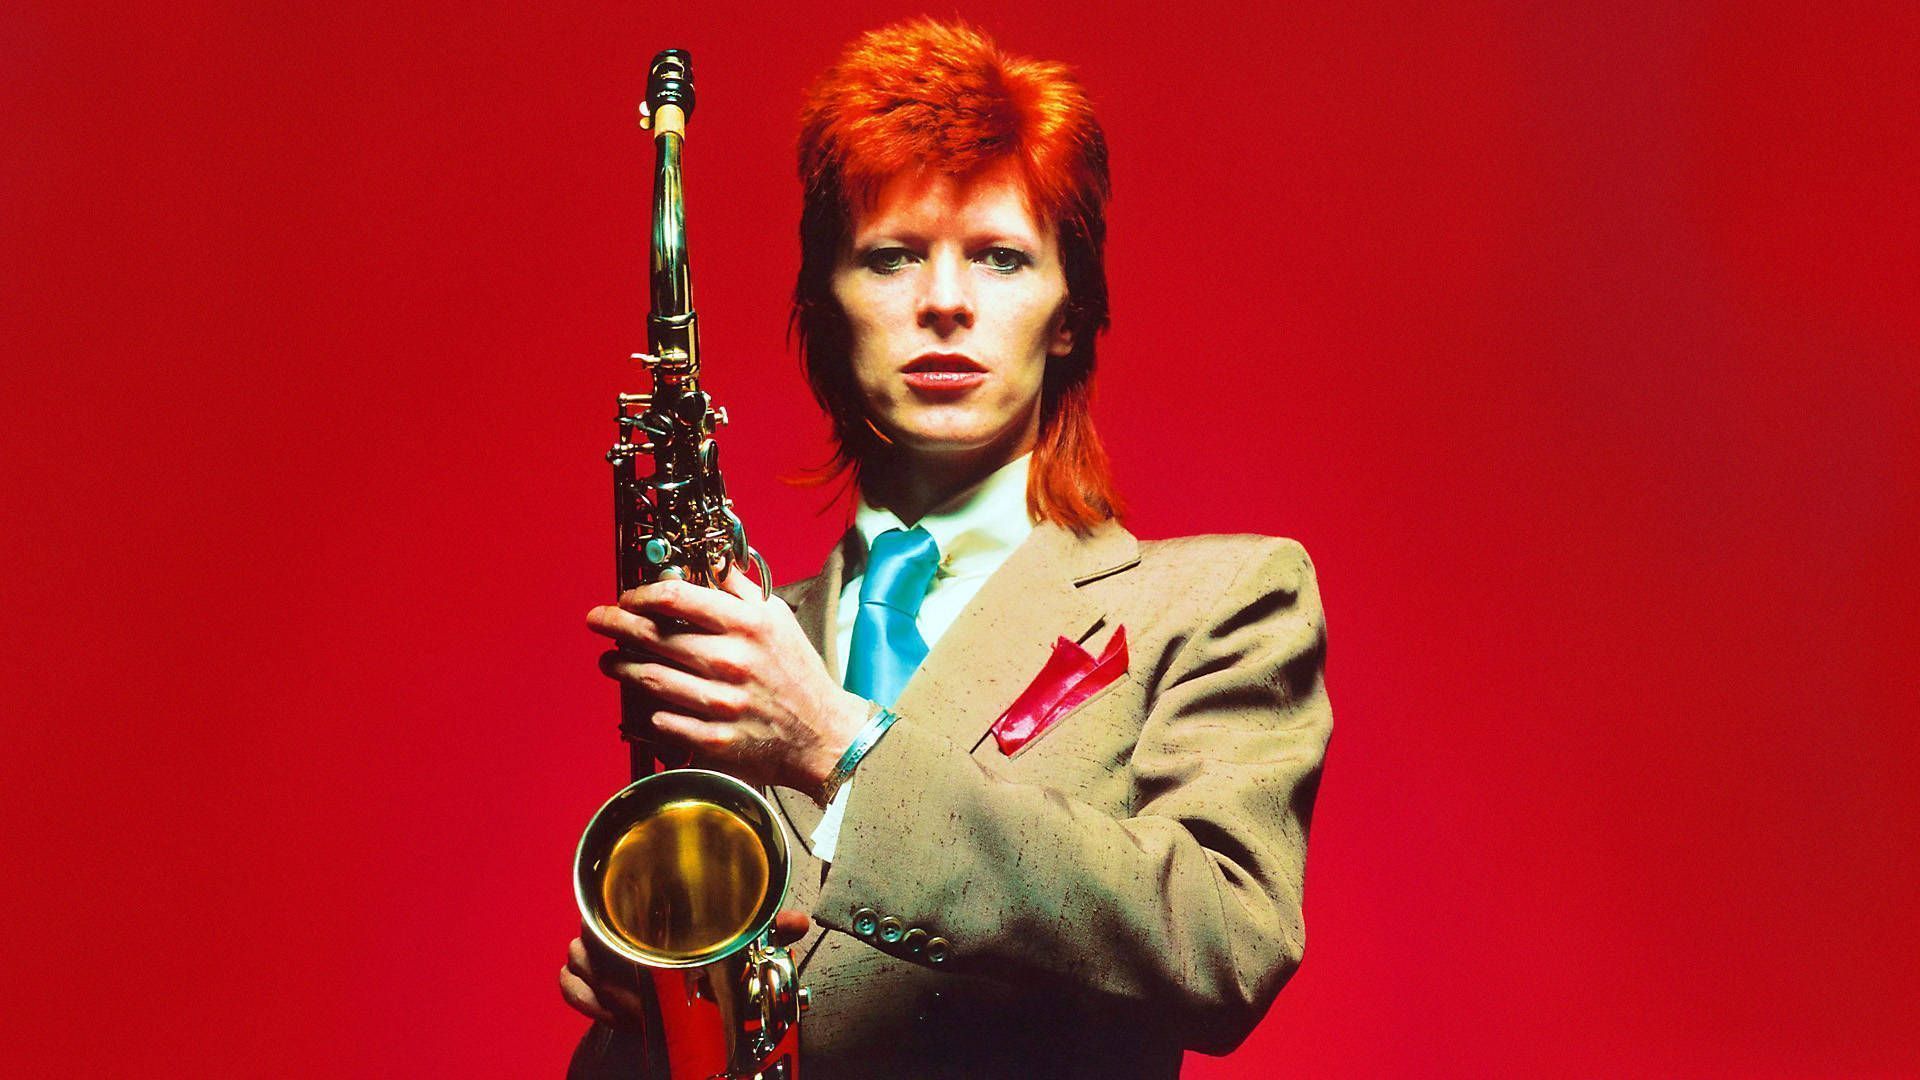 Free David Bowie Wallpaper Downloads, David Bowie Wallpaper for FREE